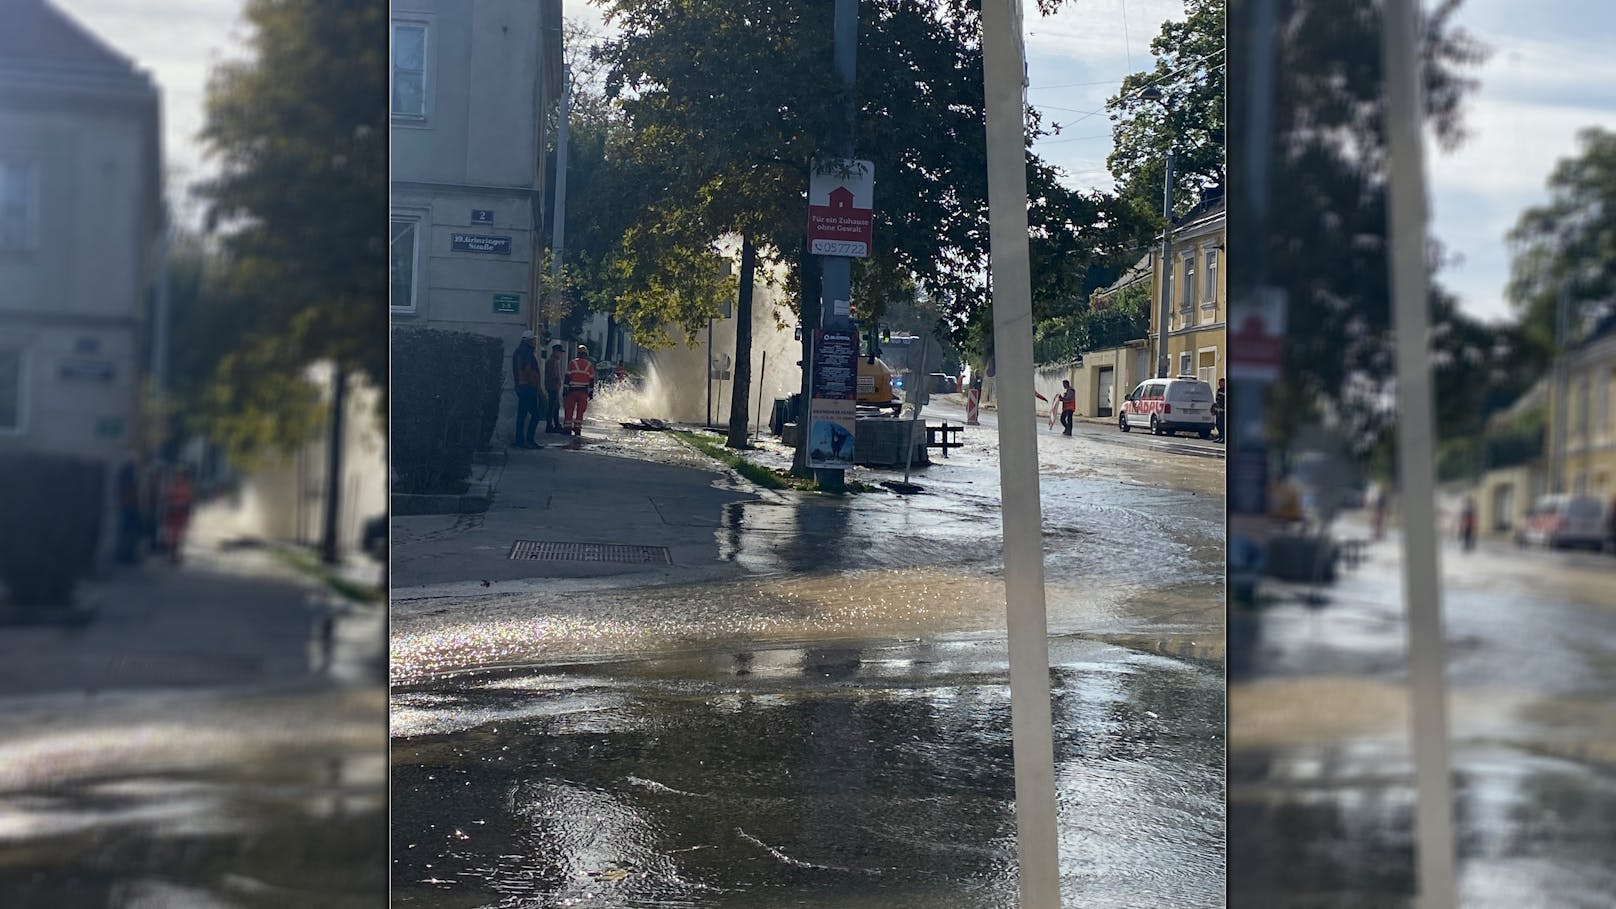 23.10.2023: <a rel="nofollow" data-li-document-ref="120001030" href="https://www.heute.at/s/bim-chaos-schadhafter-hydrant-flutet-strassen-in-wien-120001030">Bim-Chaos – Schadhafter Hydrant flutet Straßen in Wien</a>